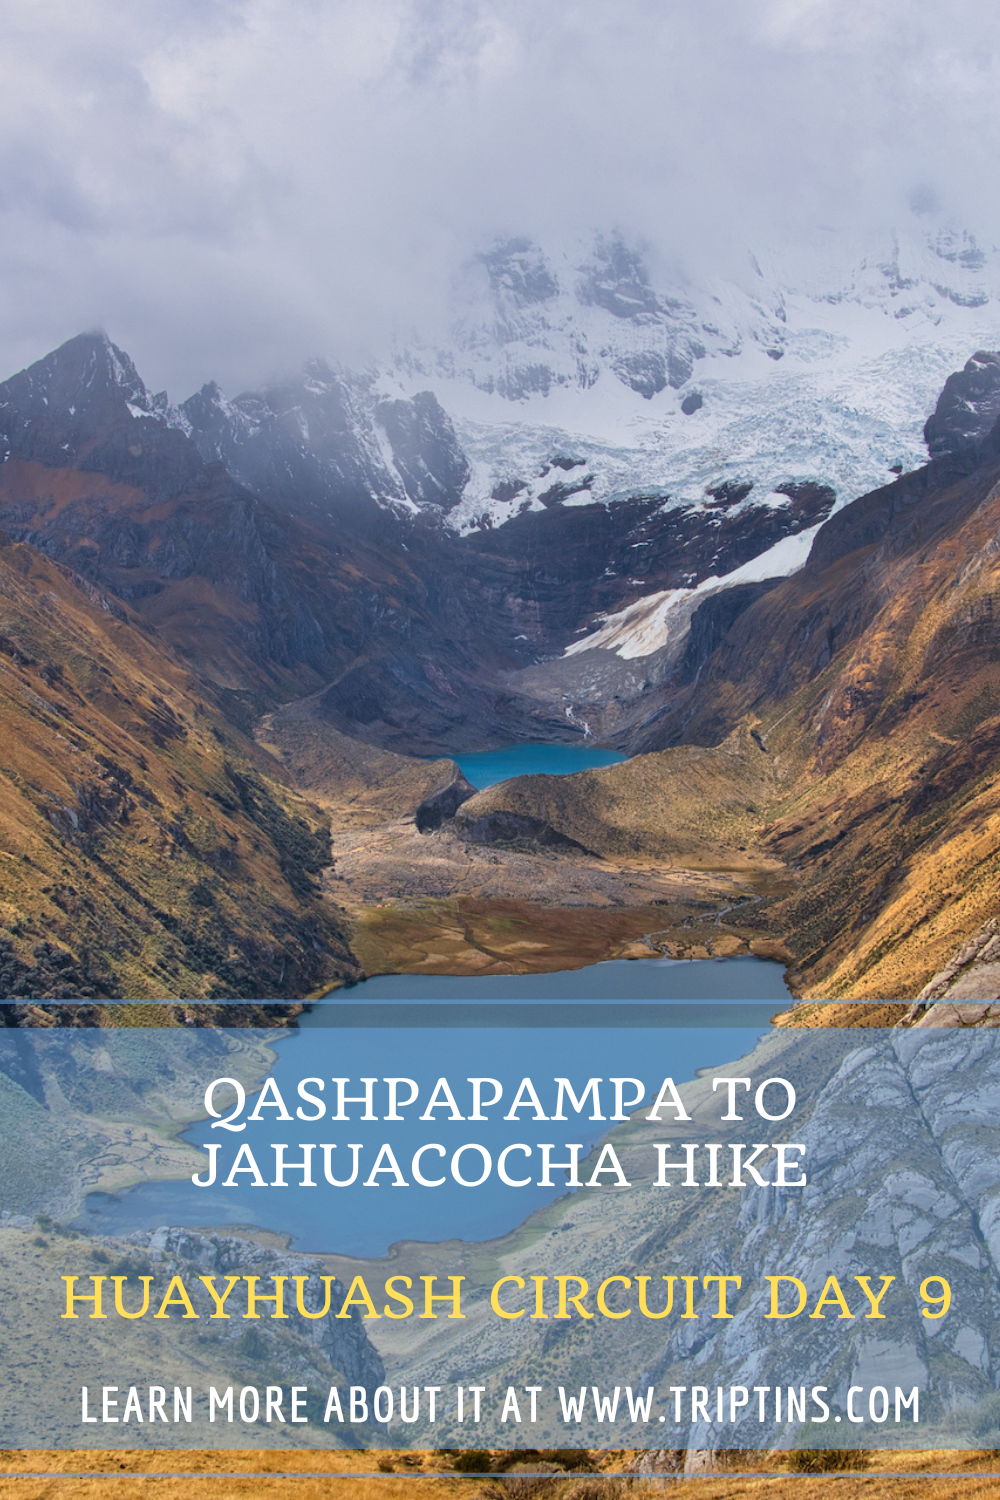 Qashpapampa to Jahuacocha Hike